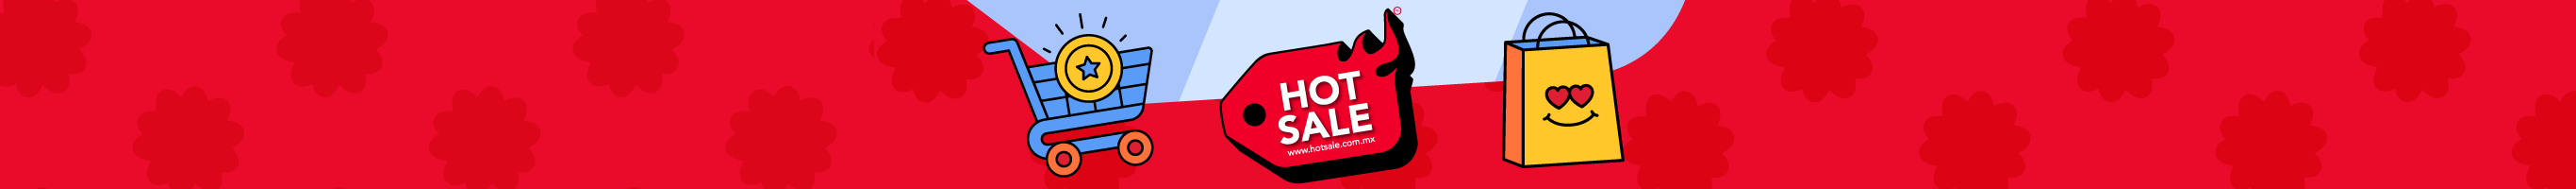 MGA - Hot Sale